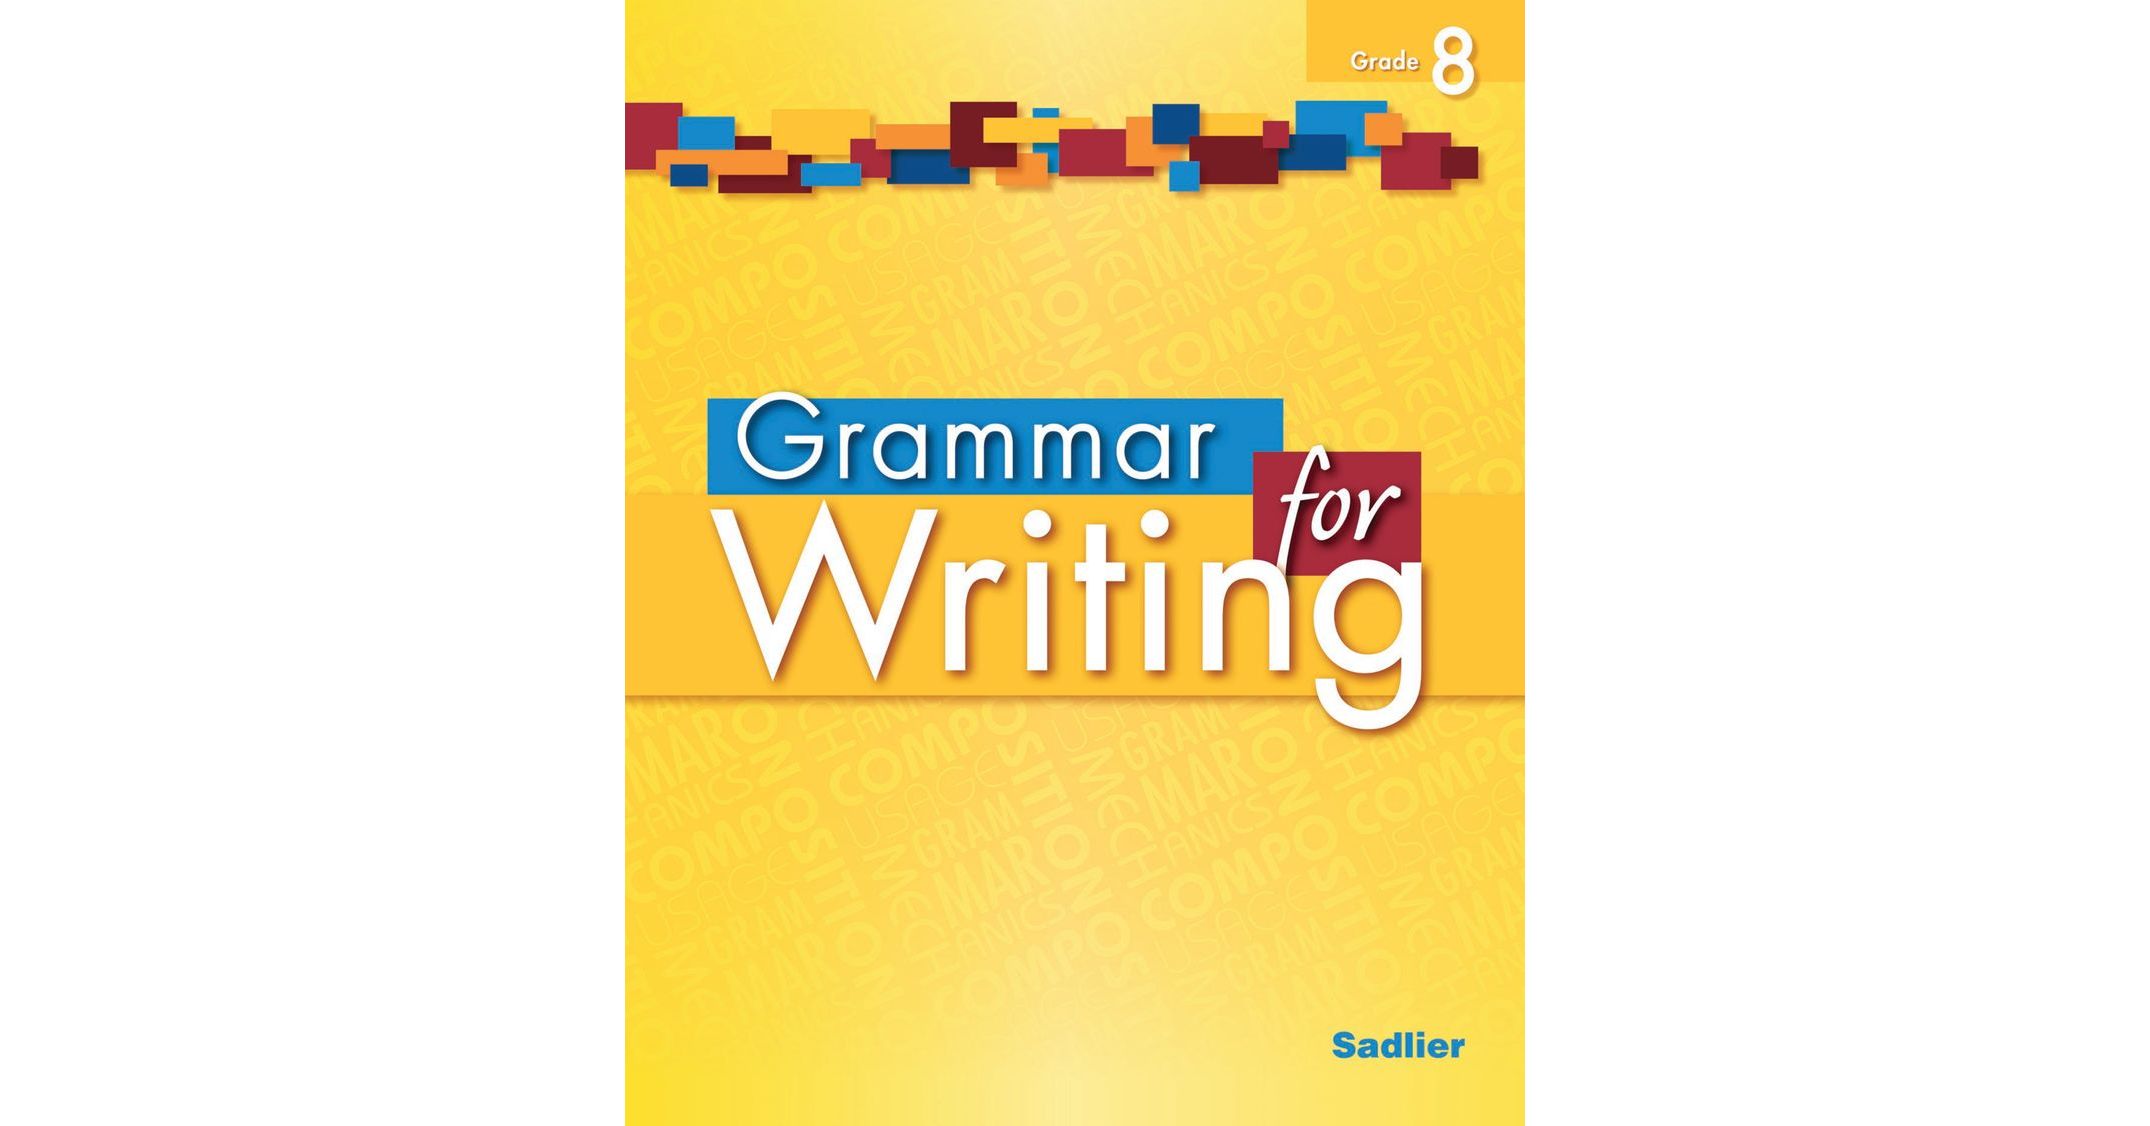 better-grammar-for-writing-grade-8-answer-key